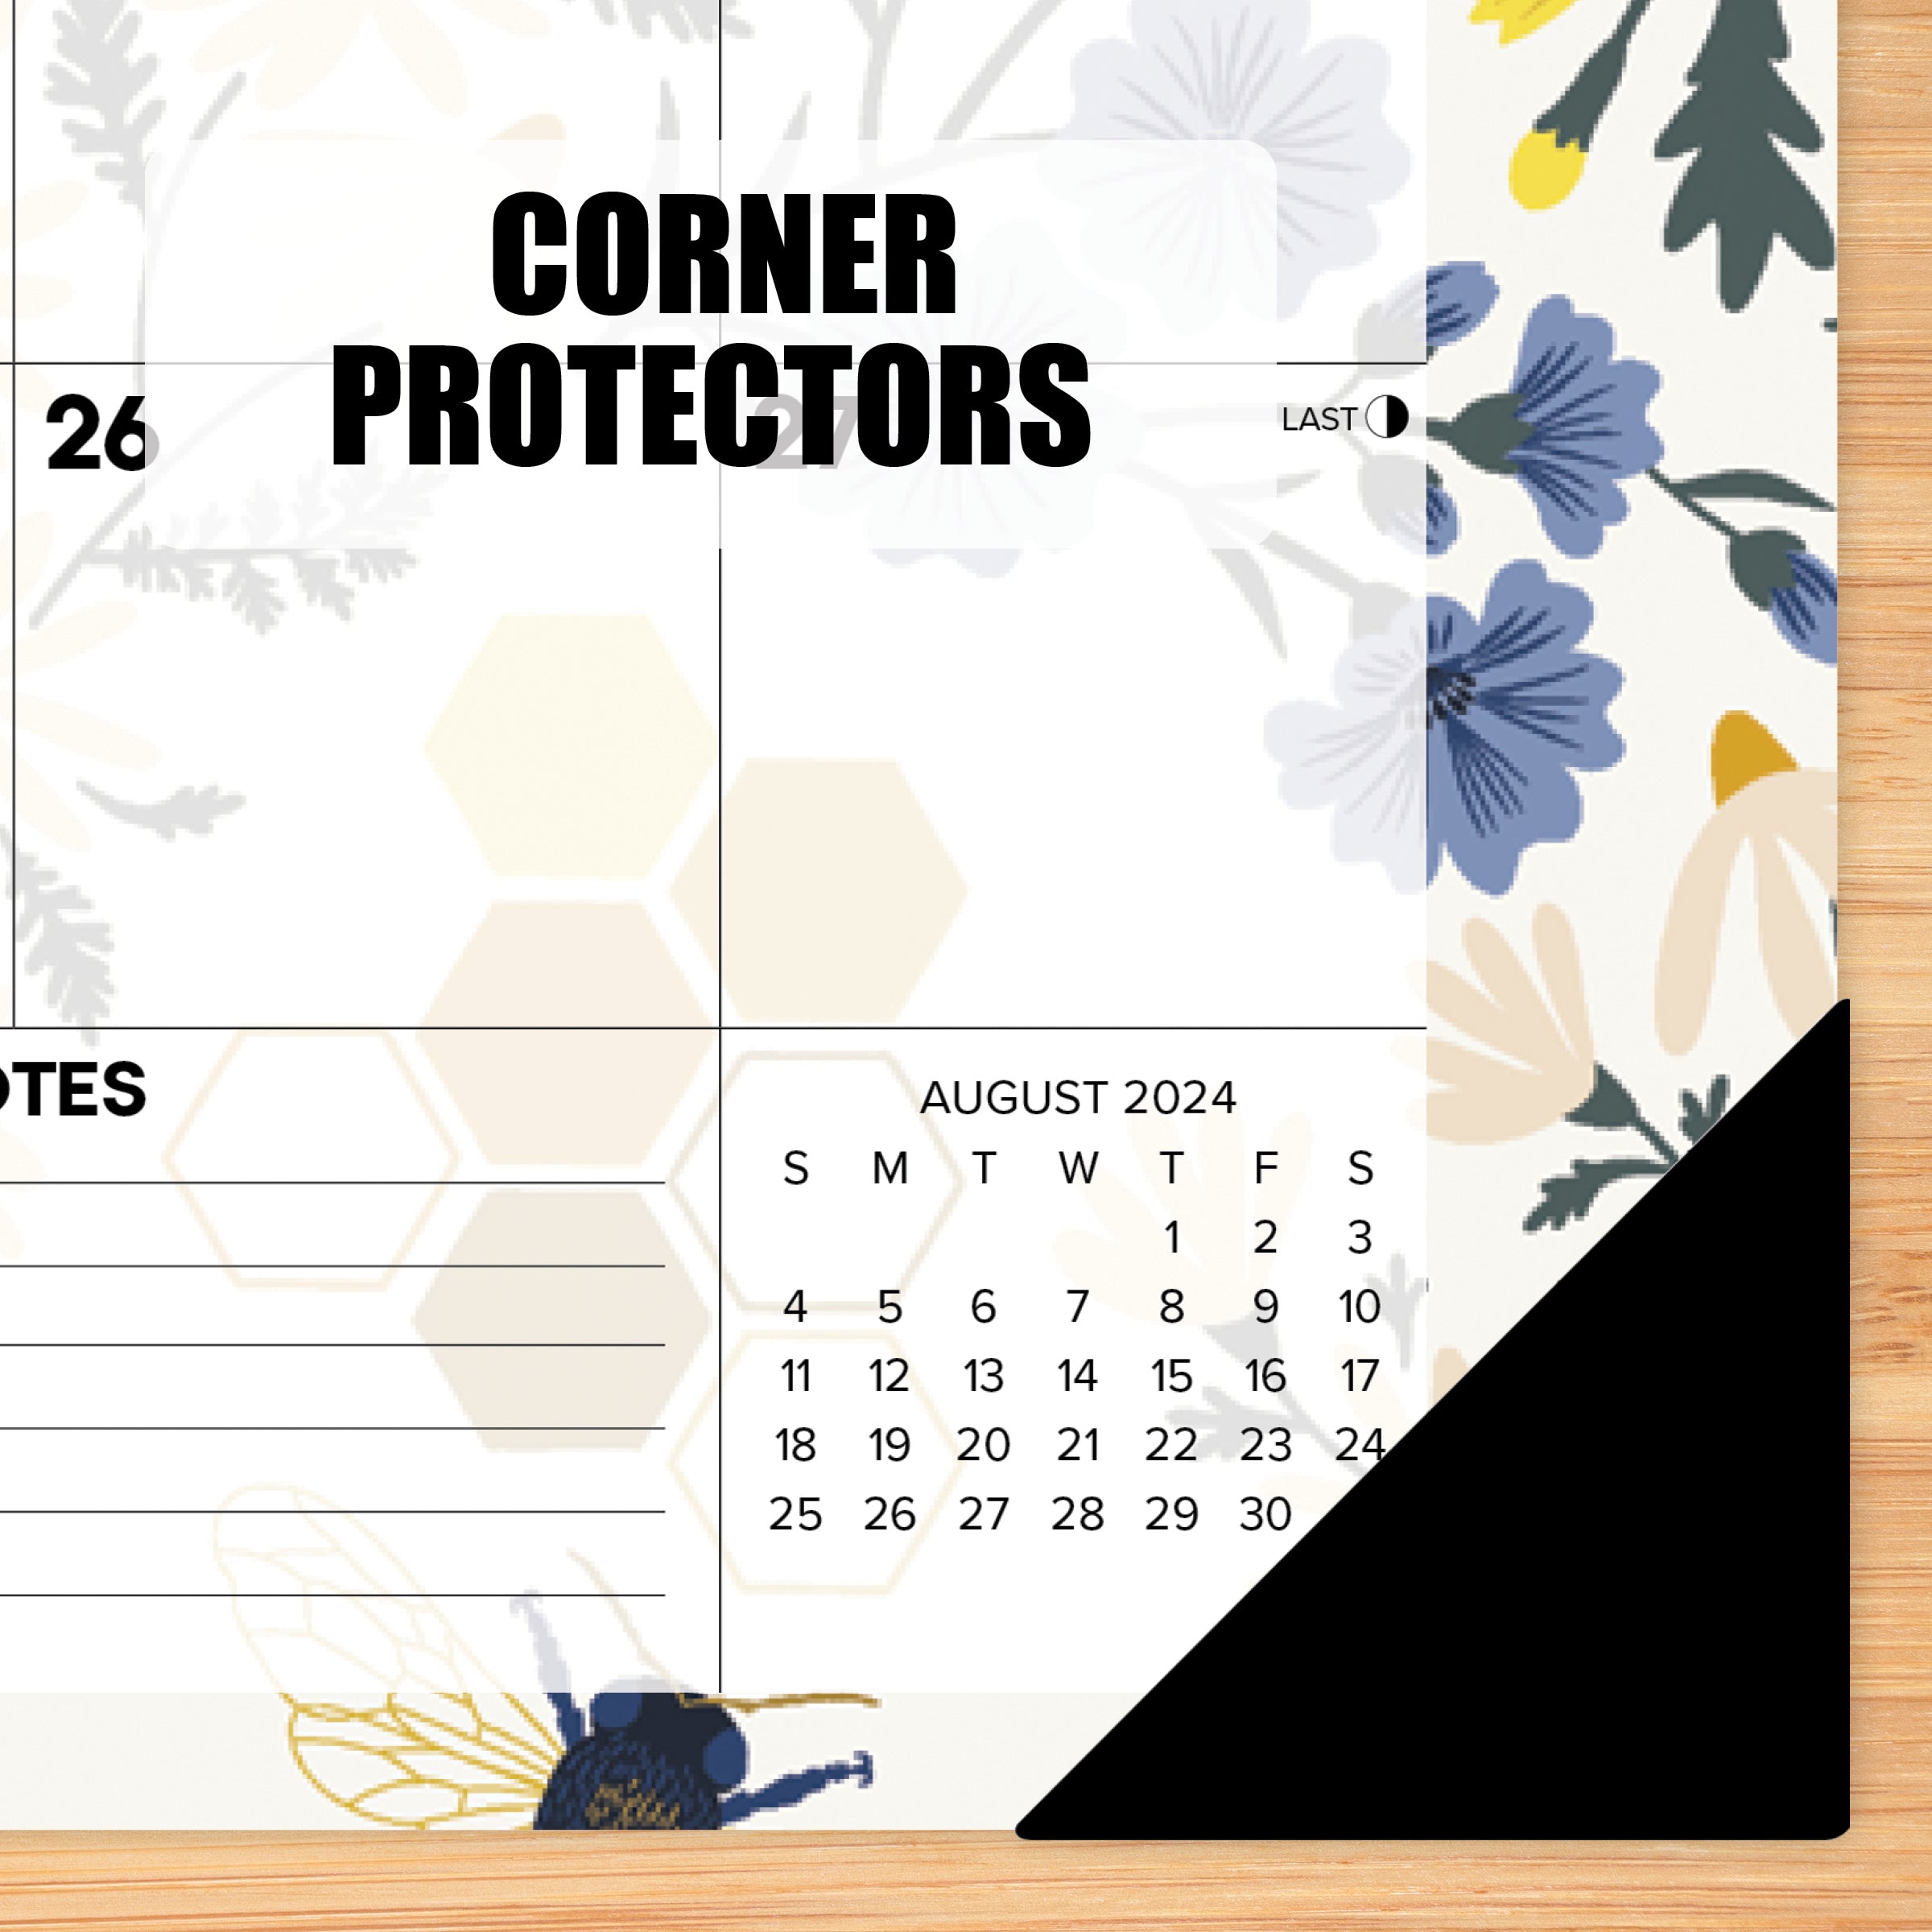 July 2024 - June 2025 Bees and Botanicals - Medium Monthly Desk Pad Academic Calendar